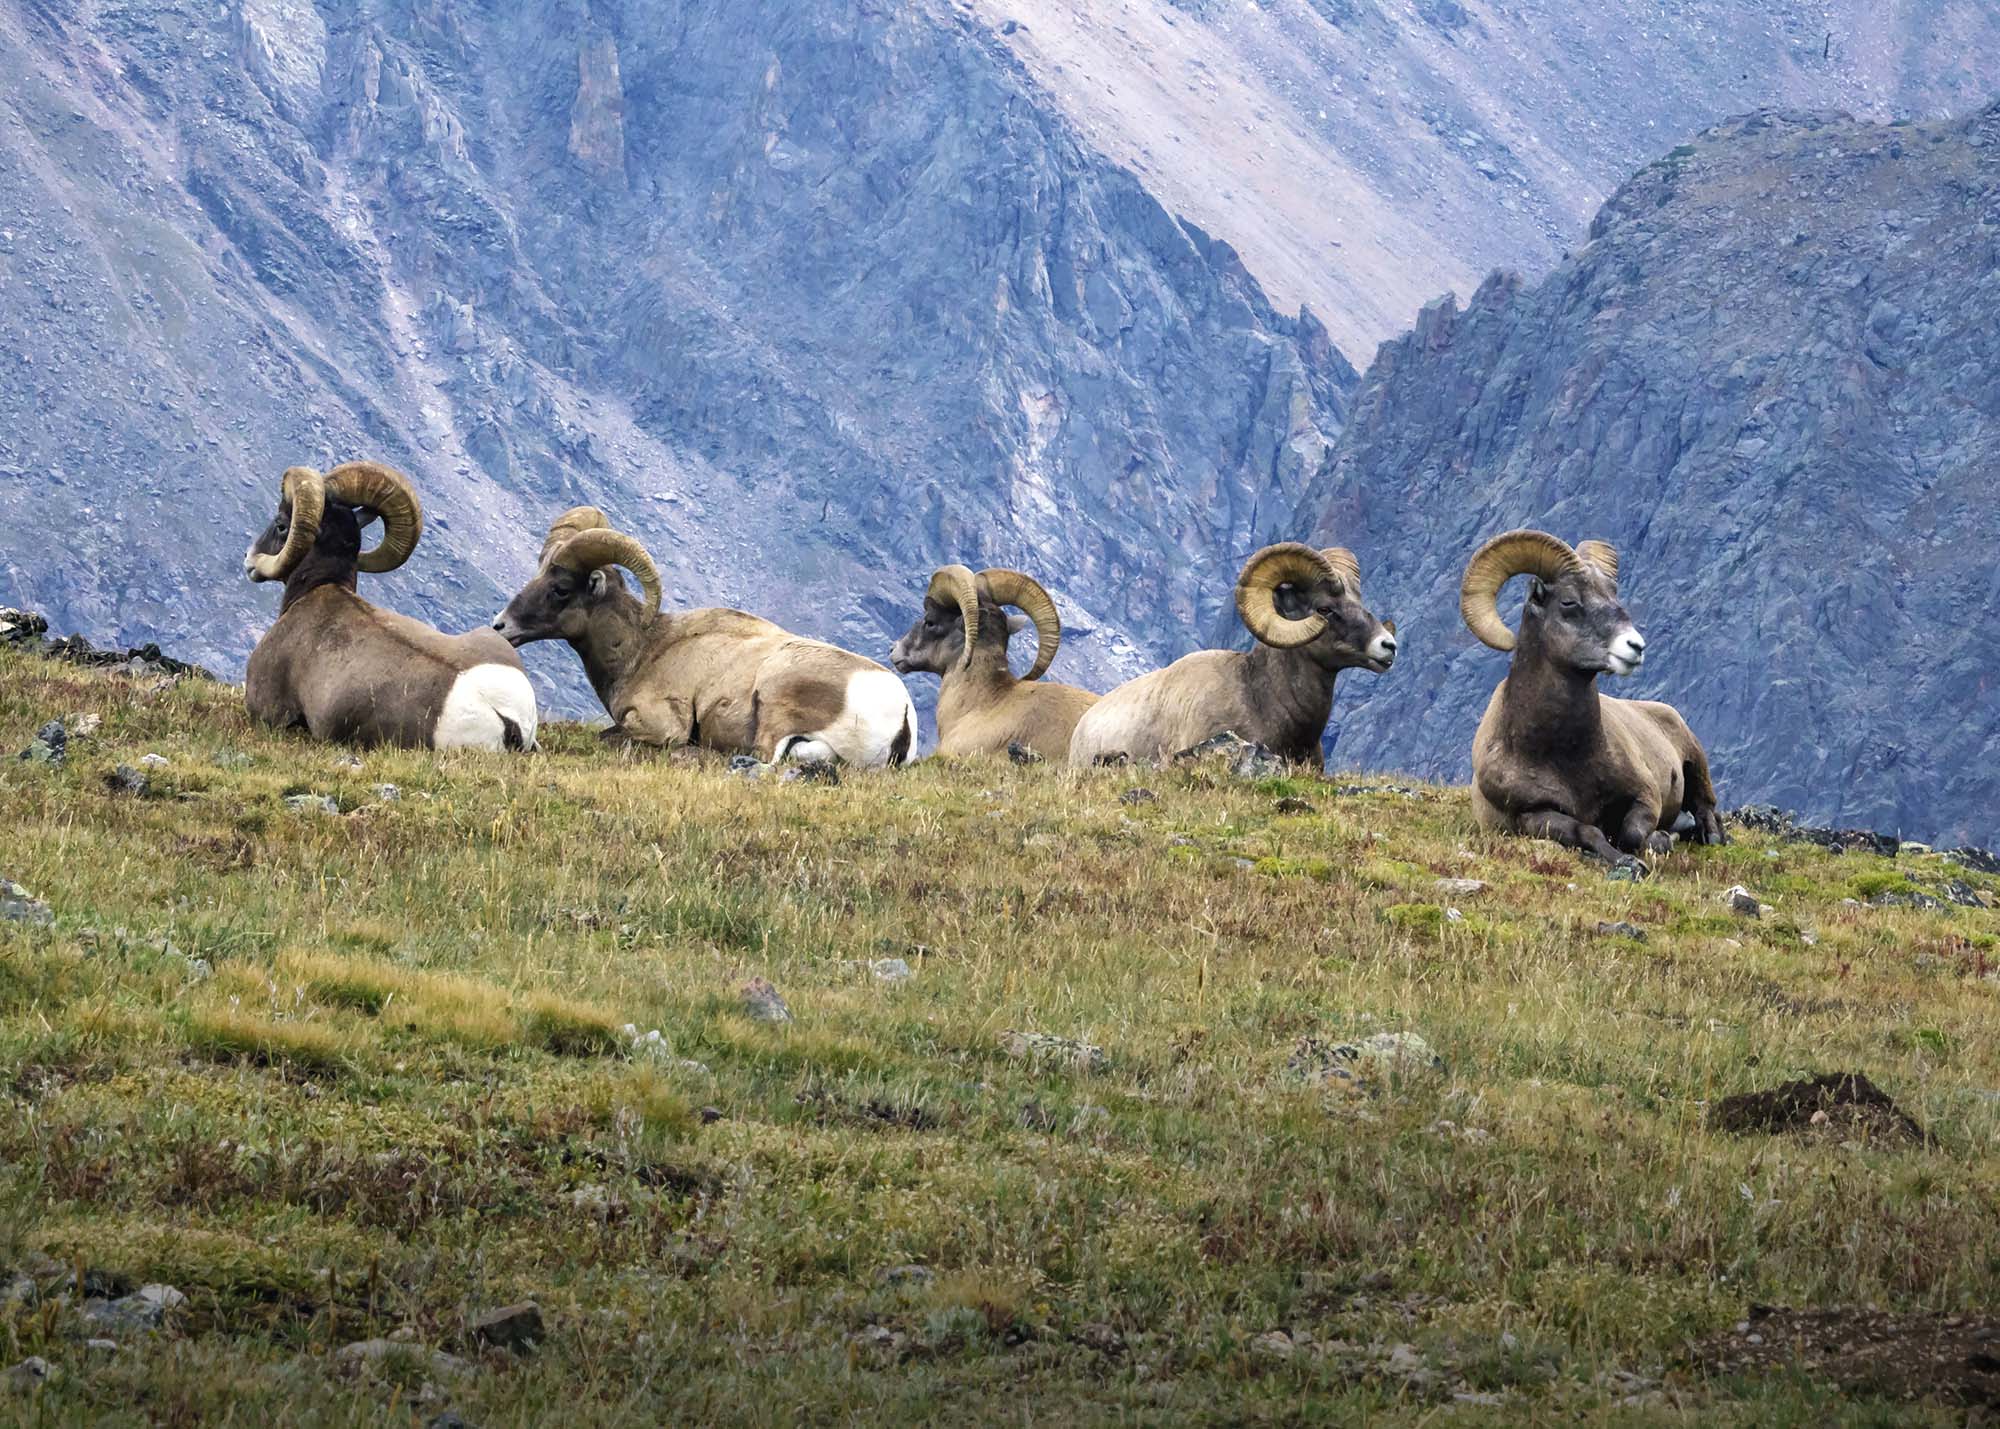 Several bighorn sheep sitting on a grassy hill.